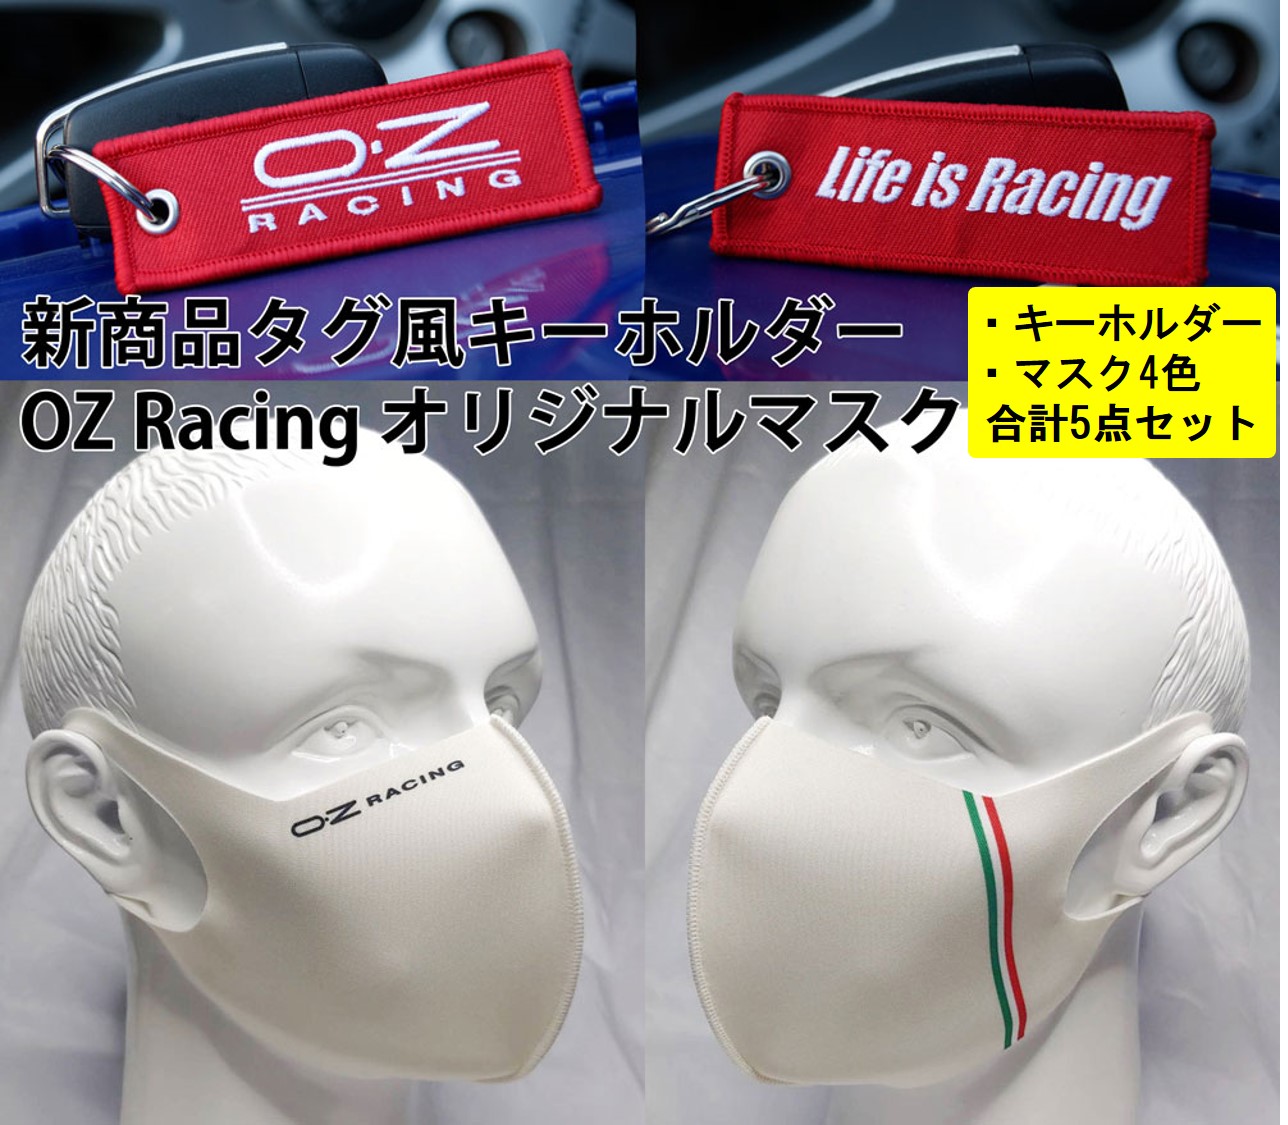 OZ Racing デザイン マスク ブルー チャコール ブラック オフホワイト